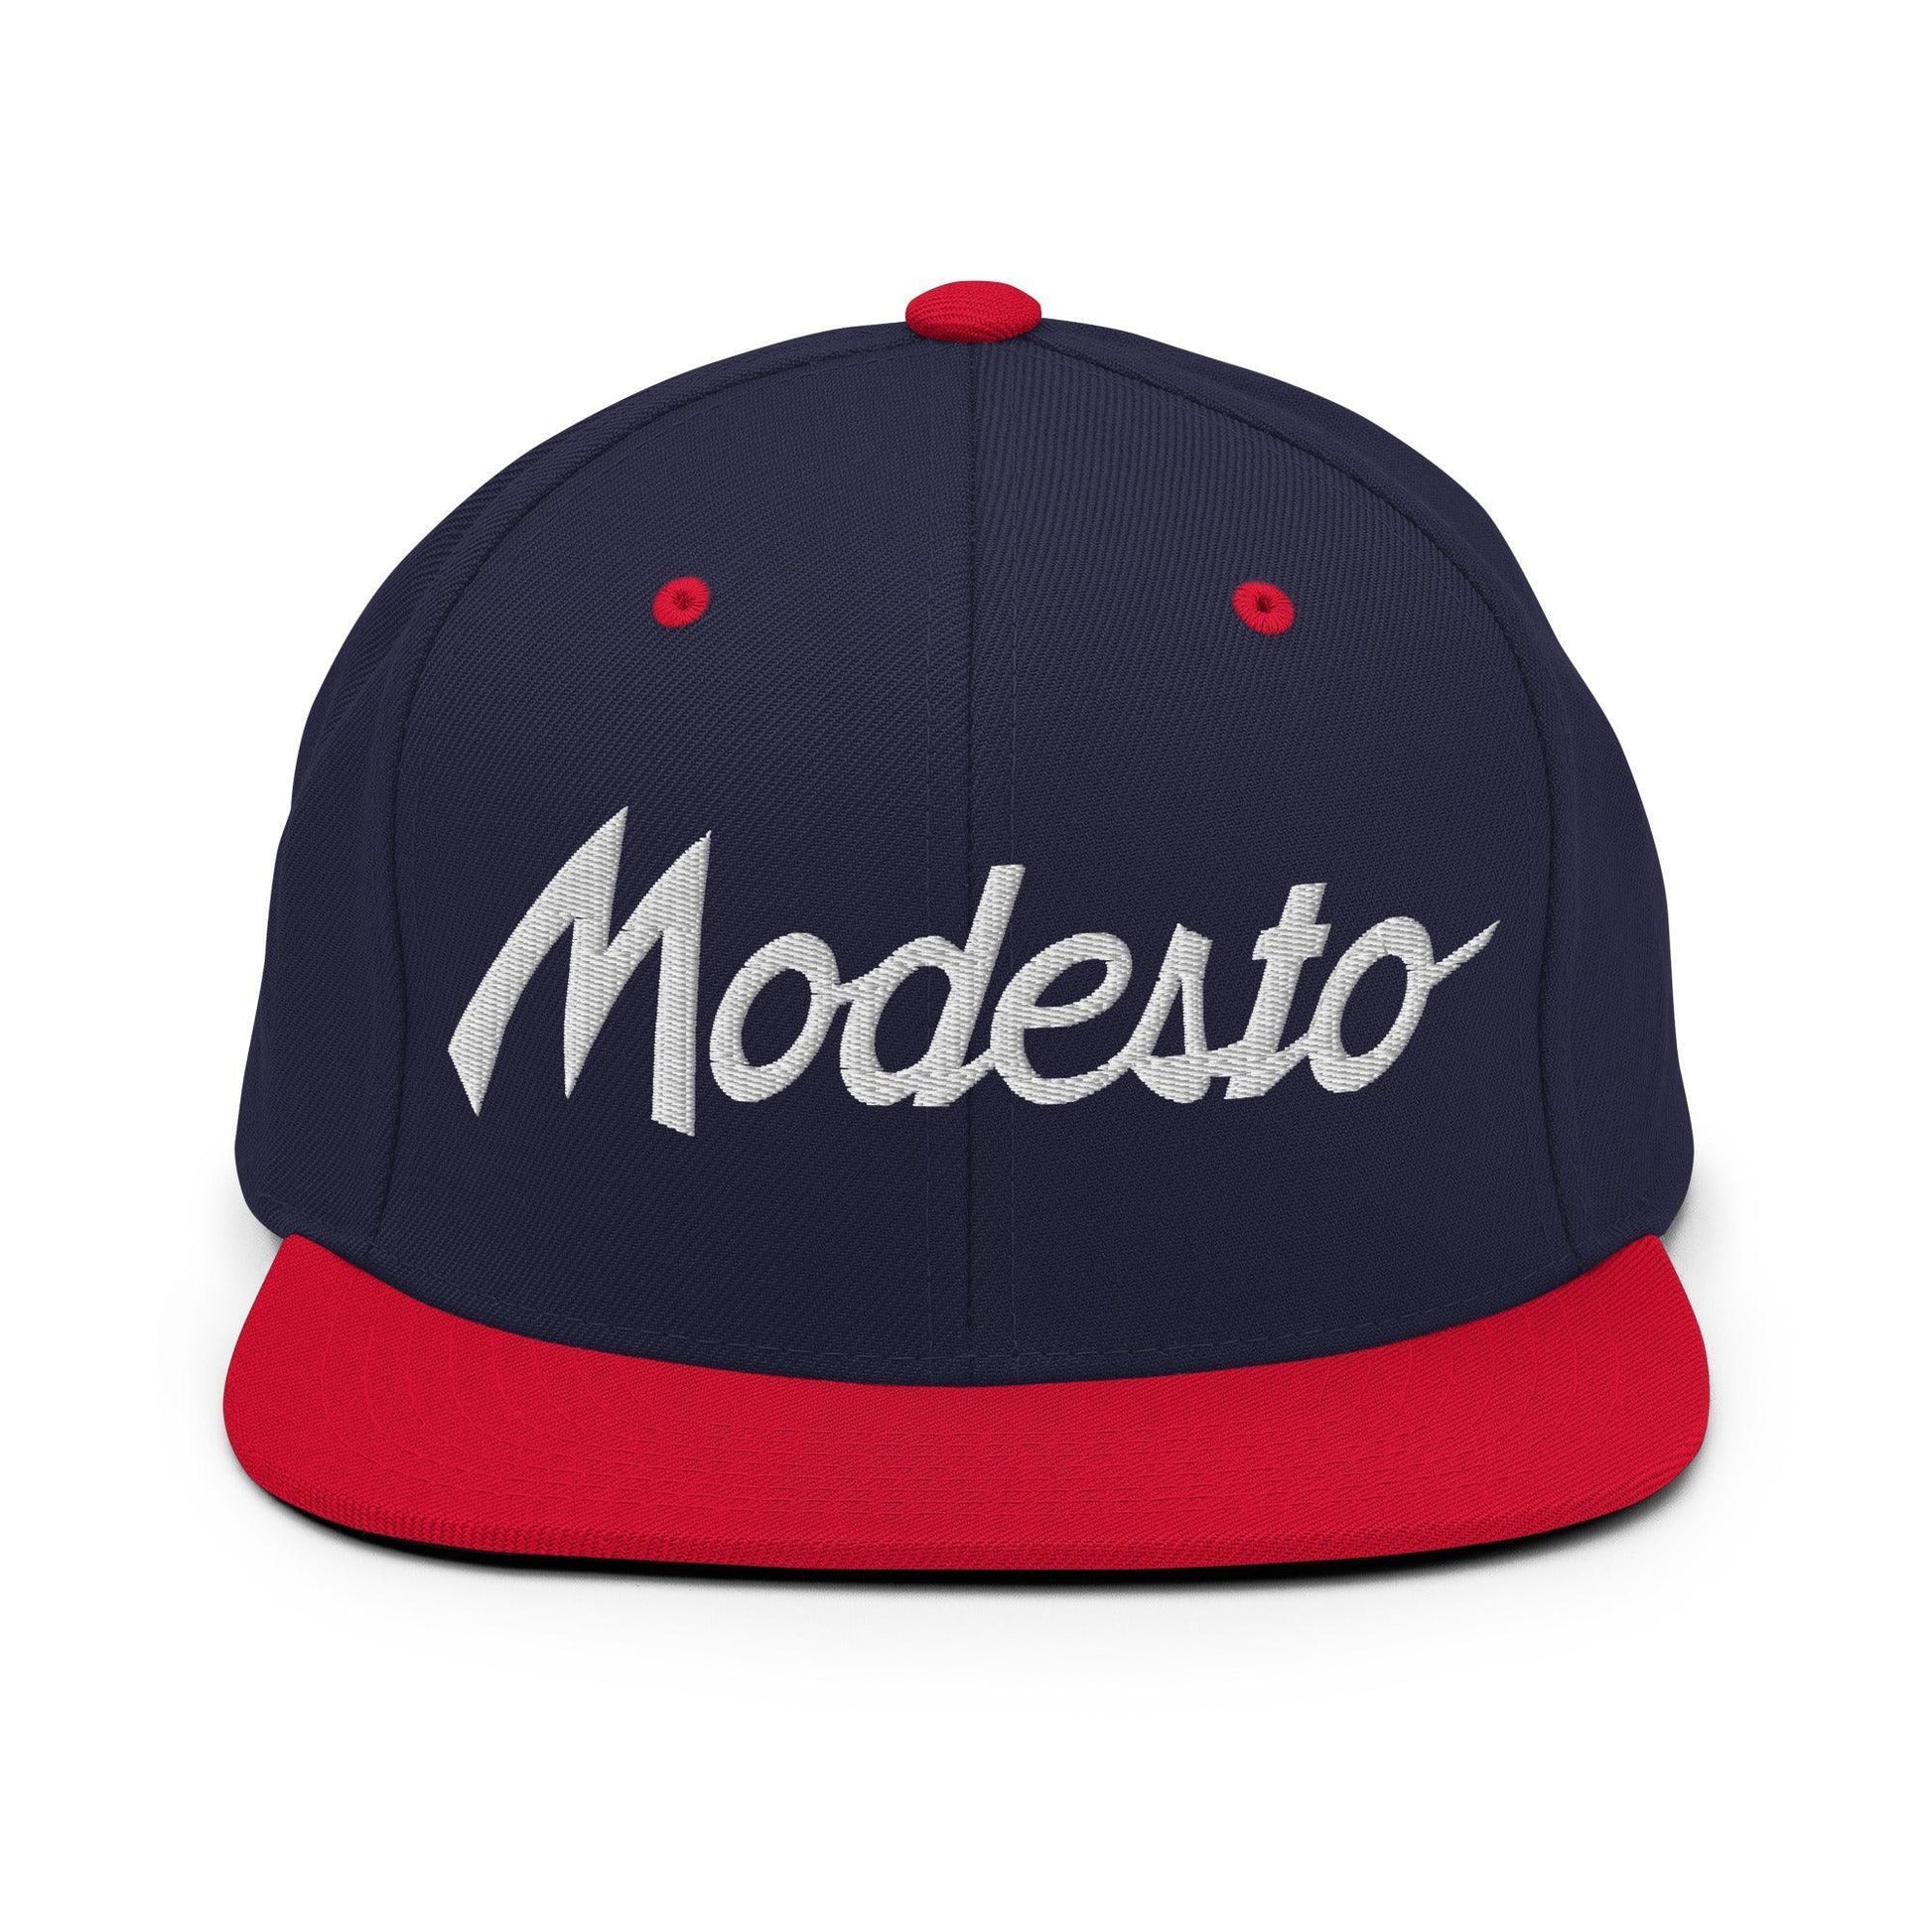 Modesto Script Snapback Hat Navy Red